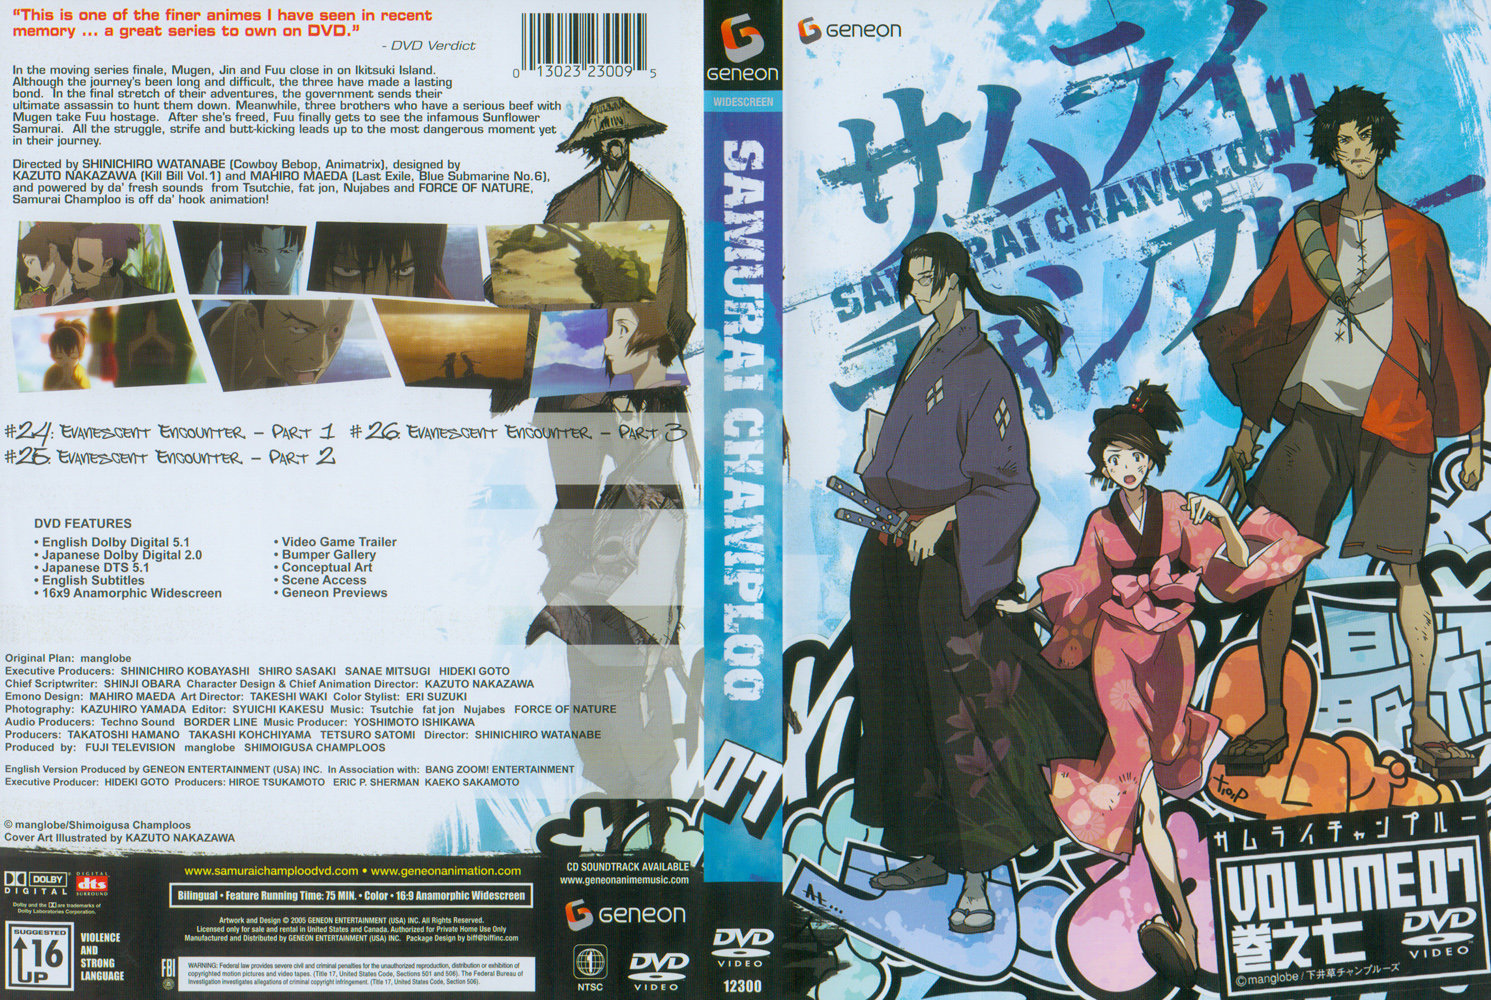 Jaquette DVD Samurai champloo vol 07 Zone 1